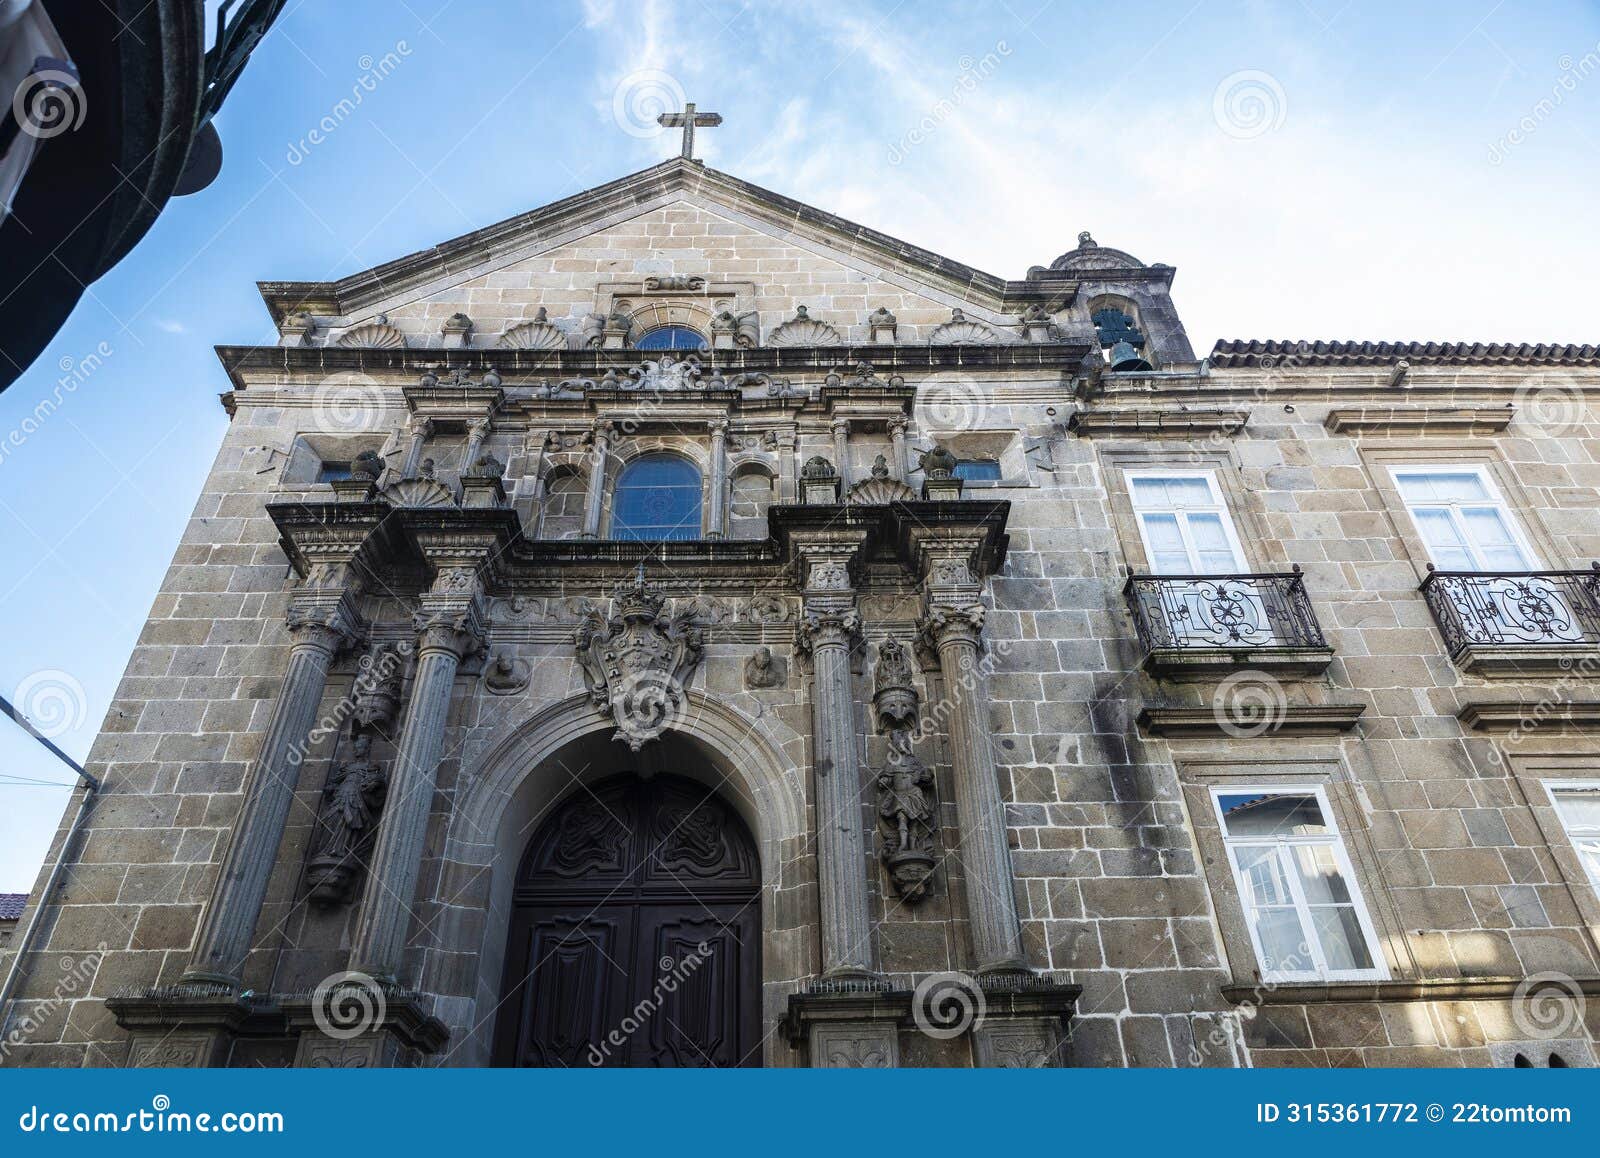 misericordia church in braga, portugal